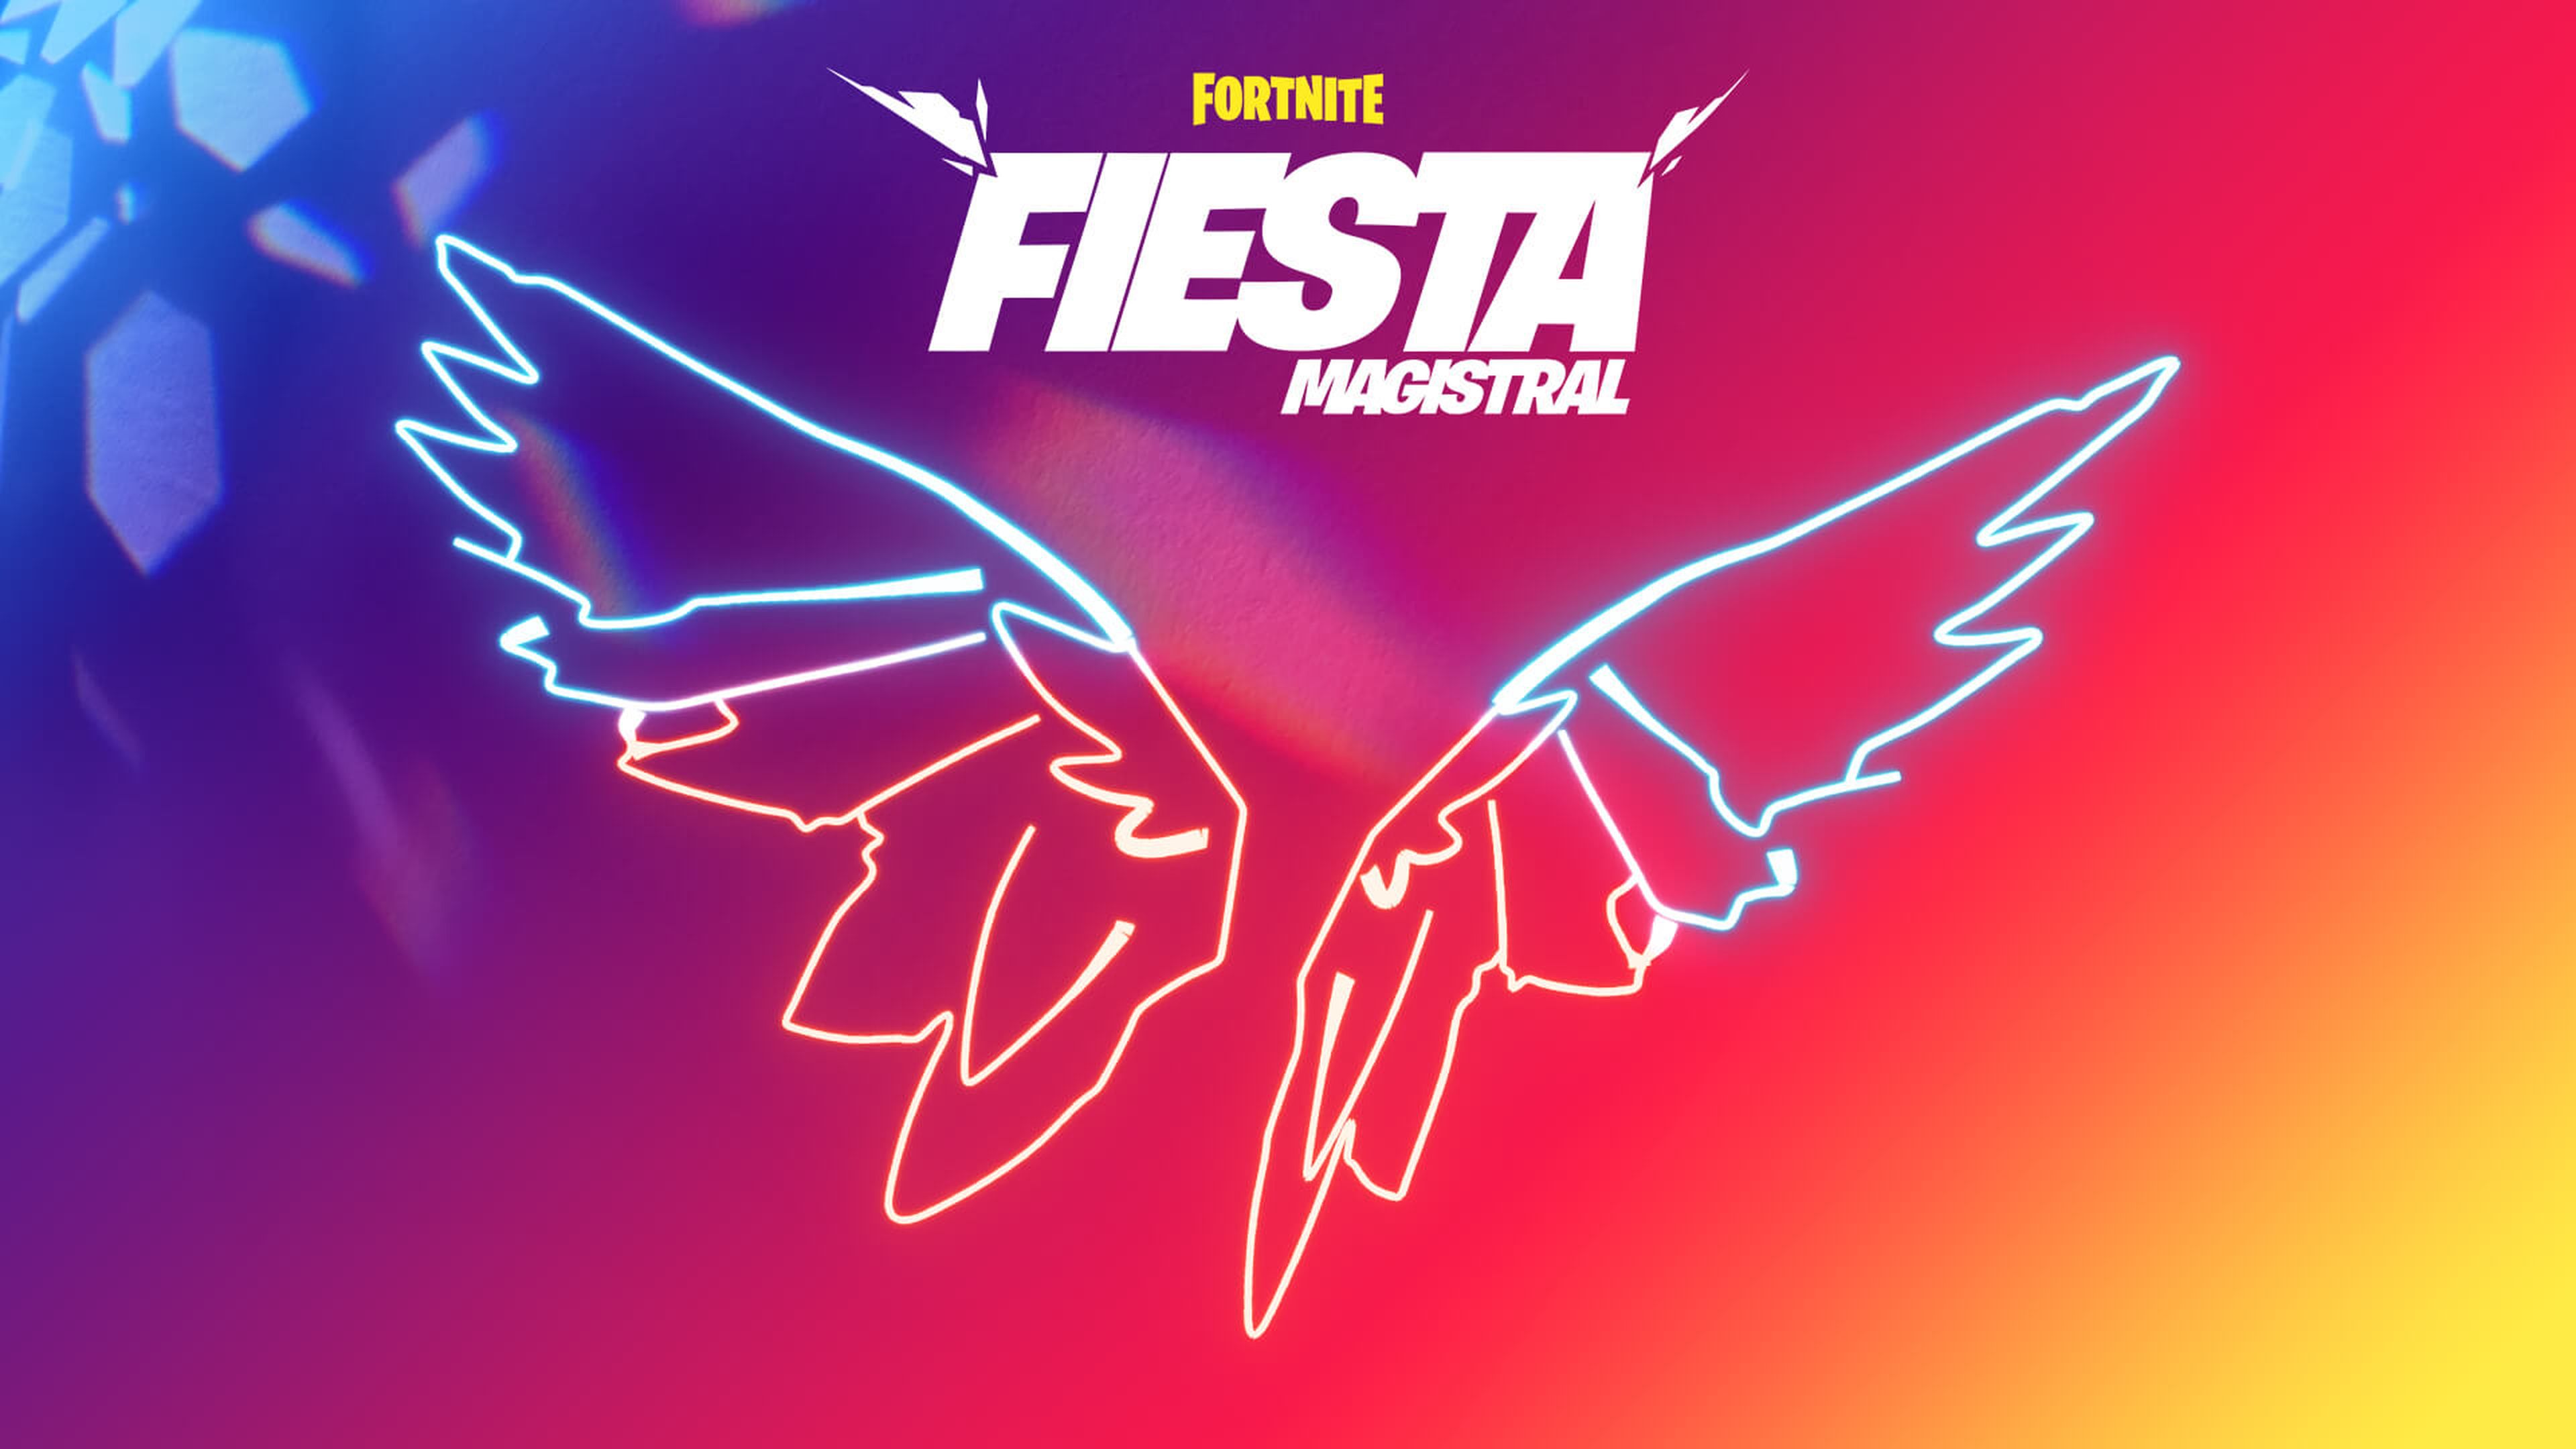 Fiesta Magistral Fortnite